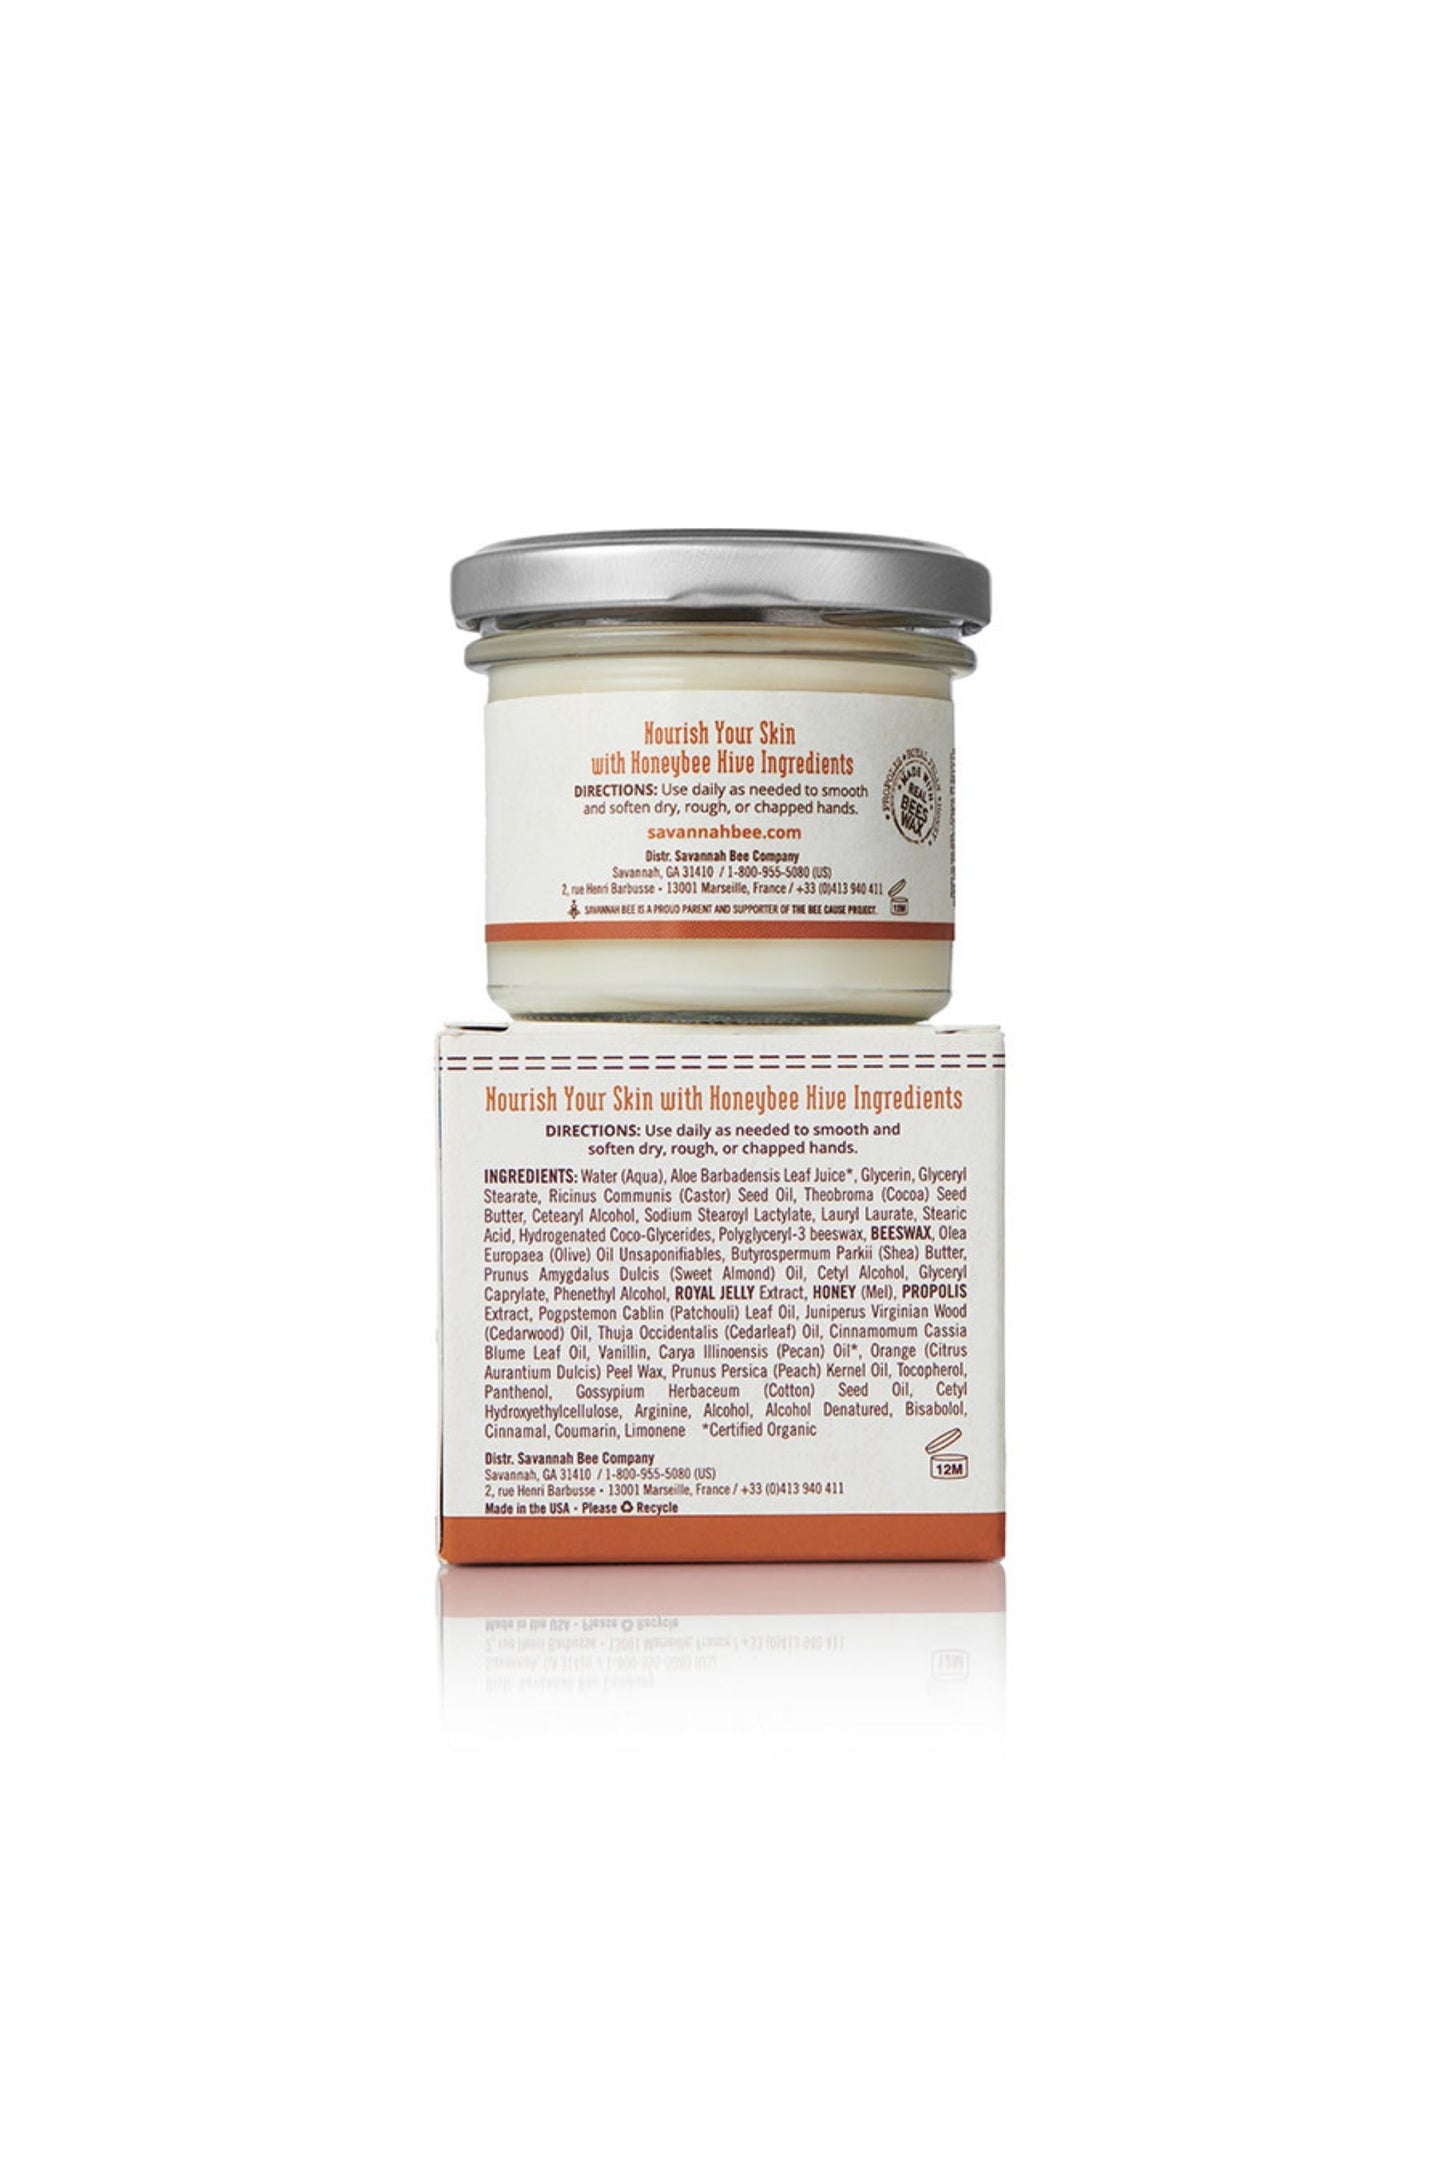 Beeswax & Royal Jelly Cedar Hand Cream Jar 3.4 oz. back image